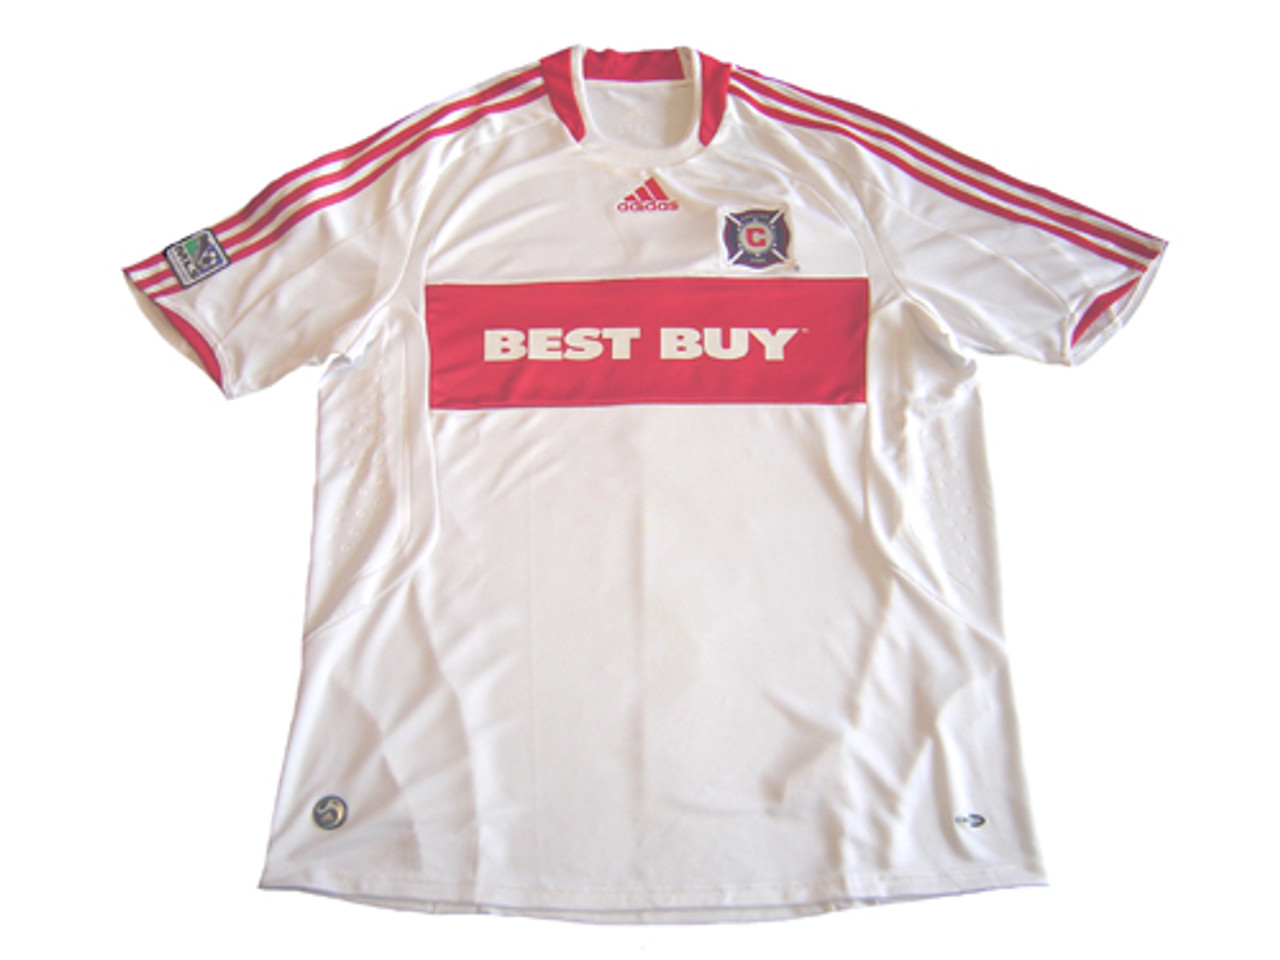 Vintage MLS Chicago Fire Best Buy soccer jersey youth medium